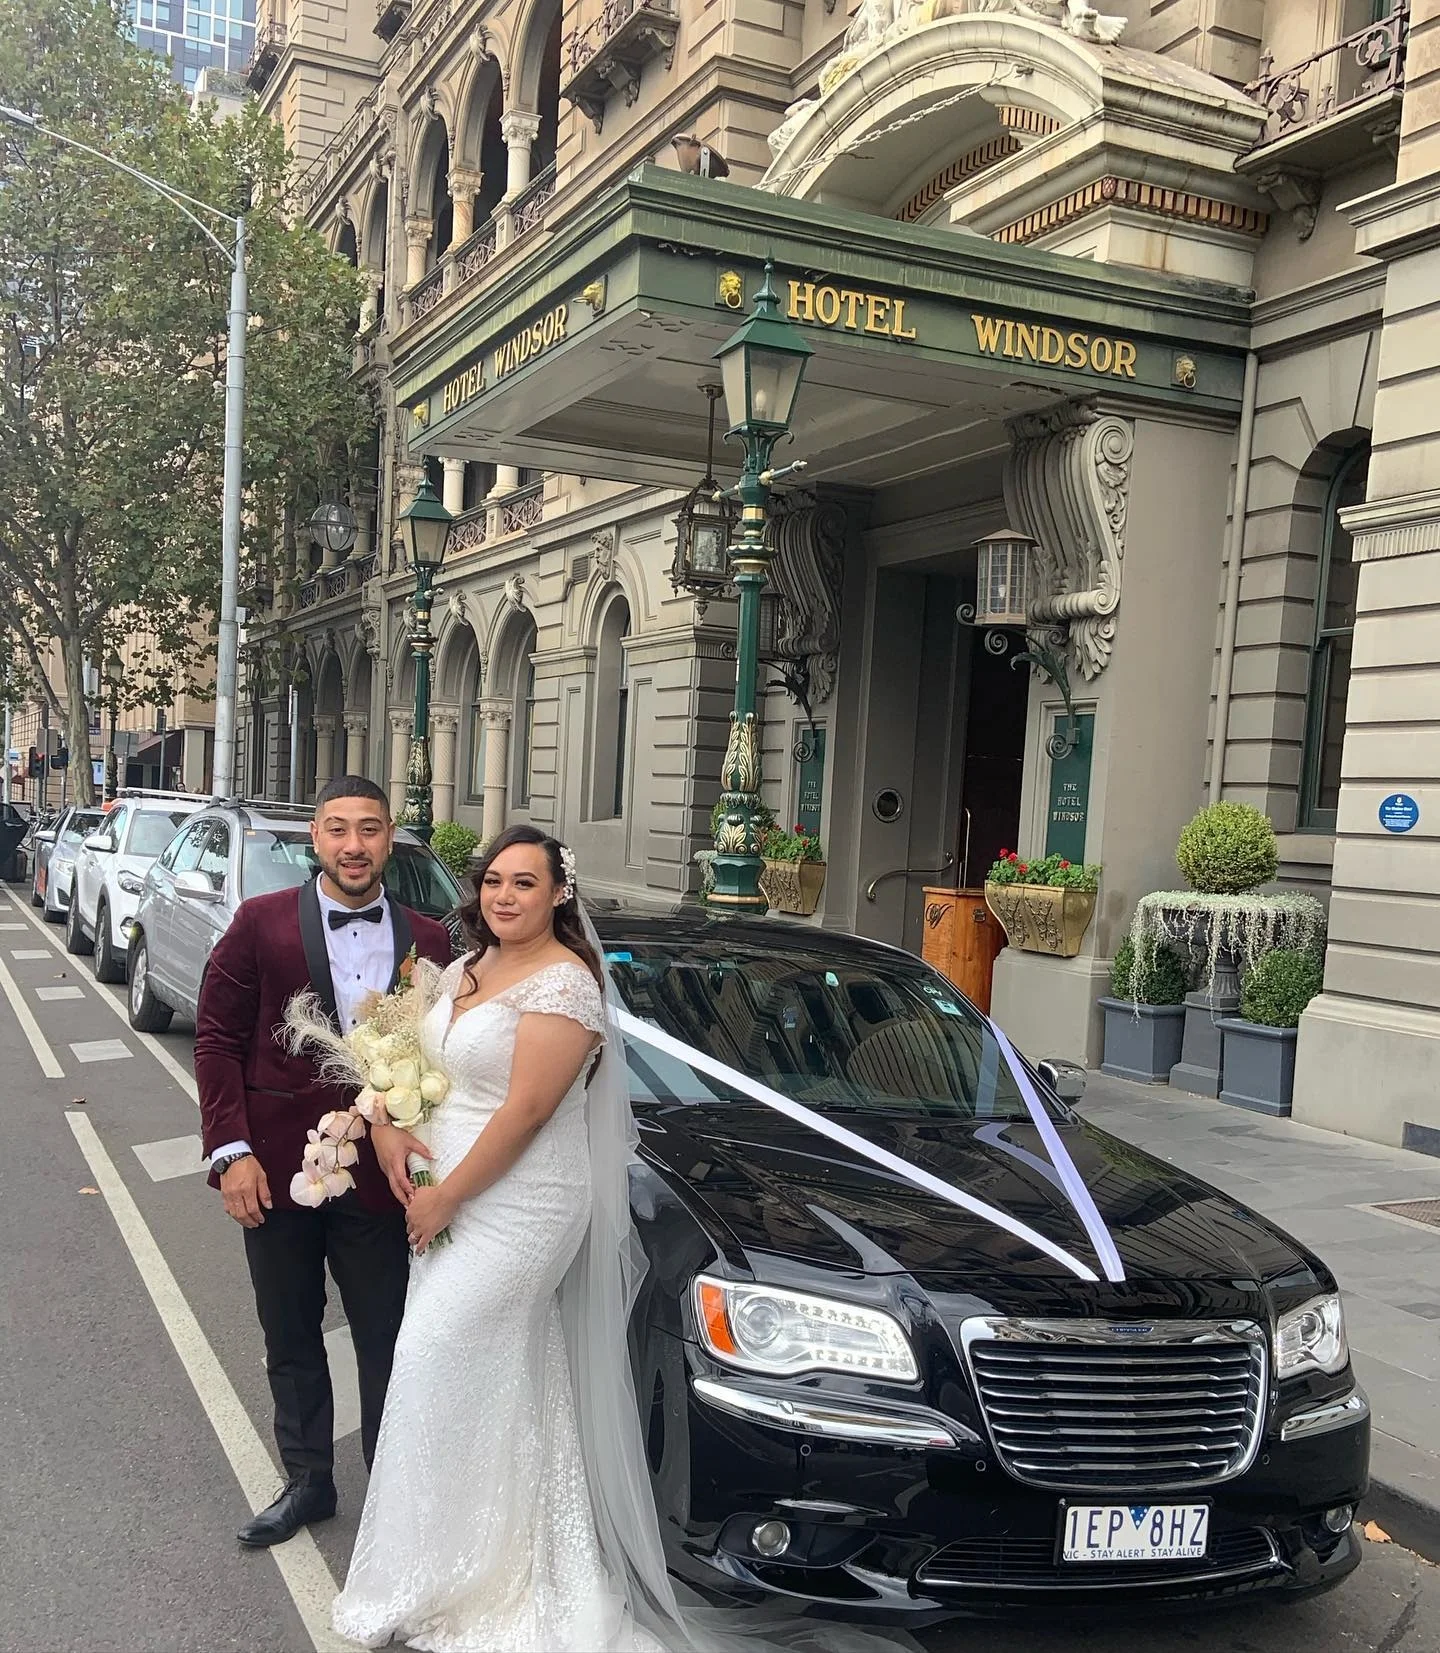 Couple Stay Near Their Wedding Transport